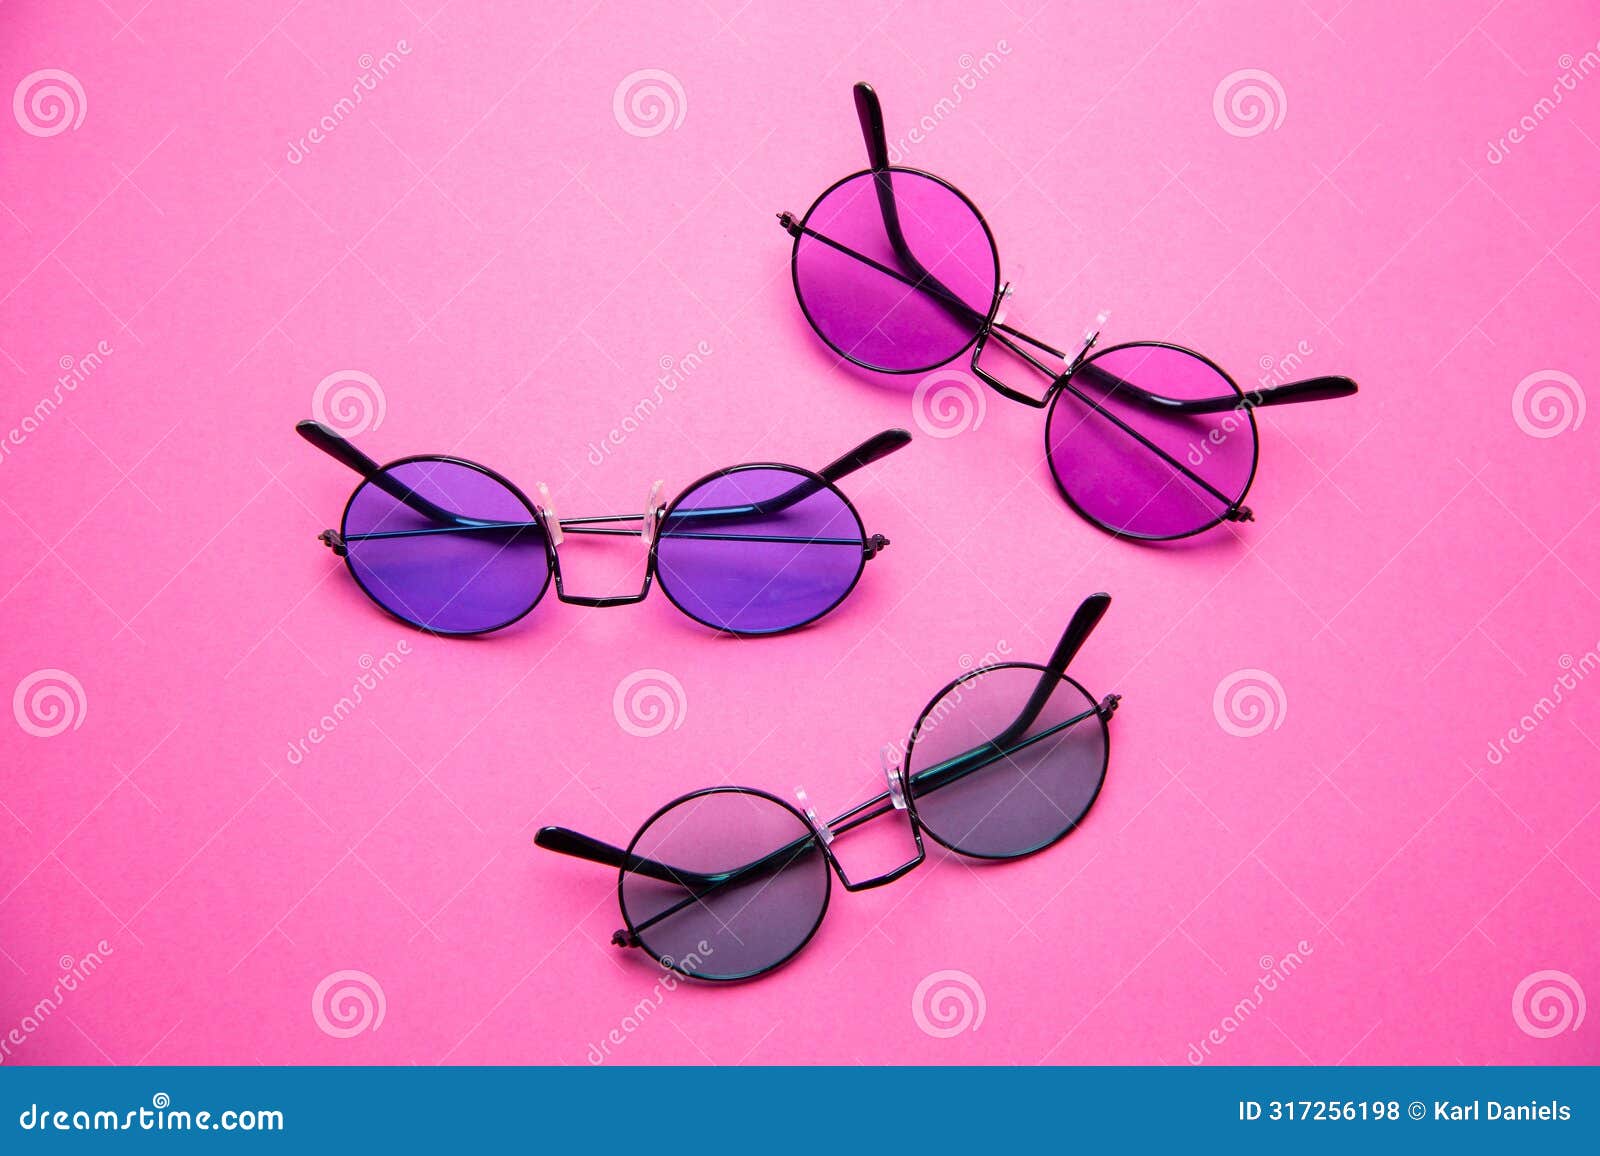 round prop sunglasses on pink background landscape